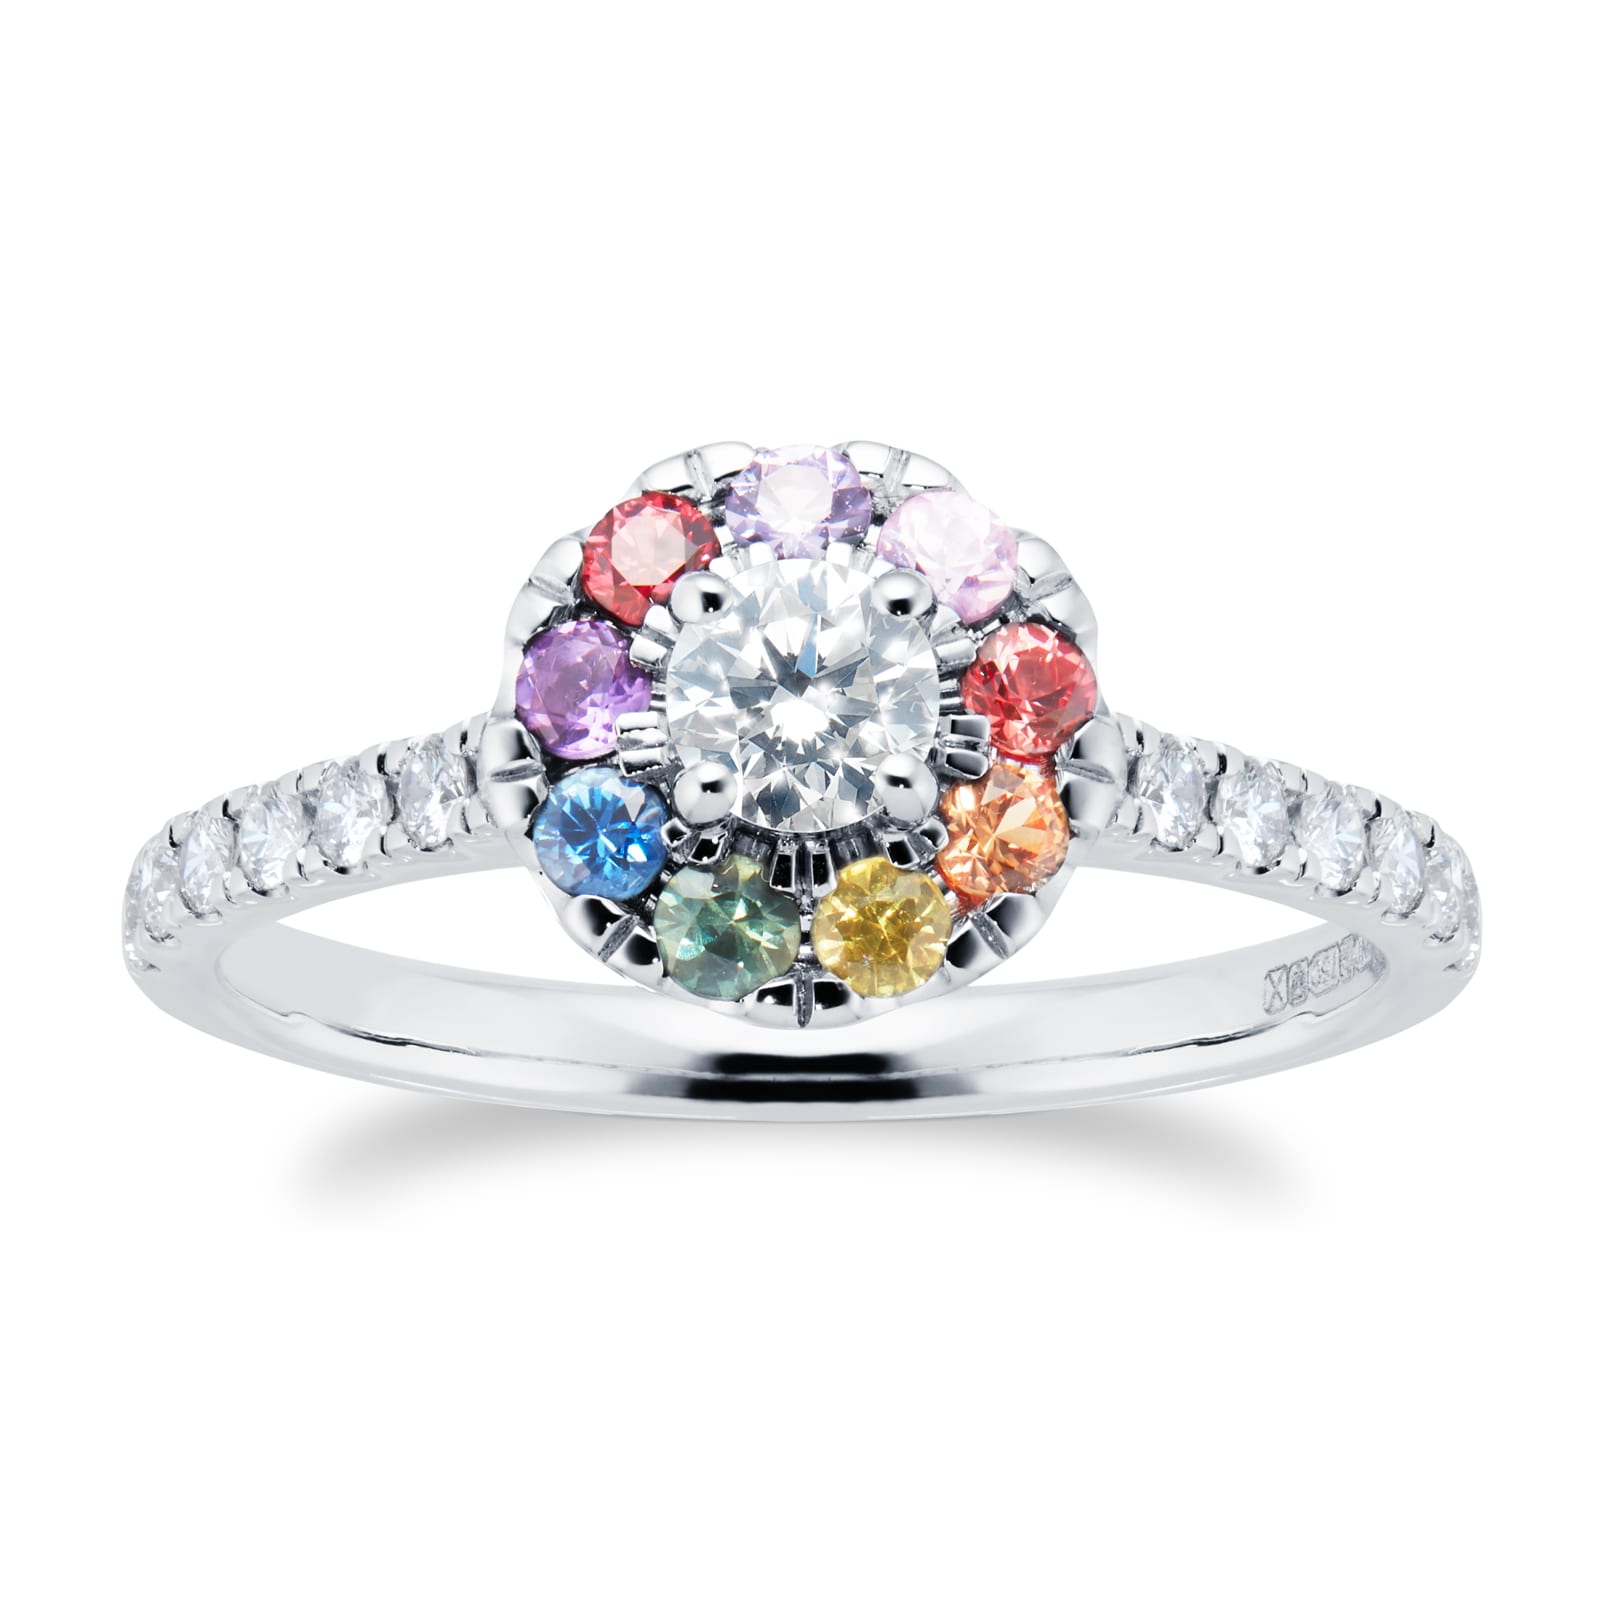 18ct White Gold Diamond & Rainbow Sapphire Halo Ring - Ring Size L.5